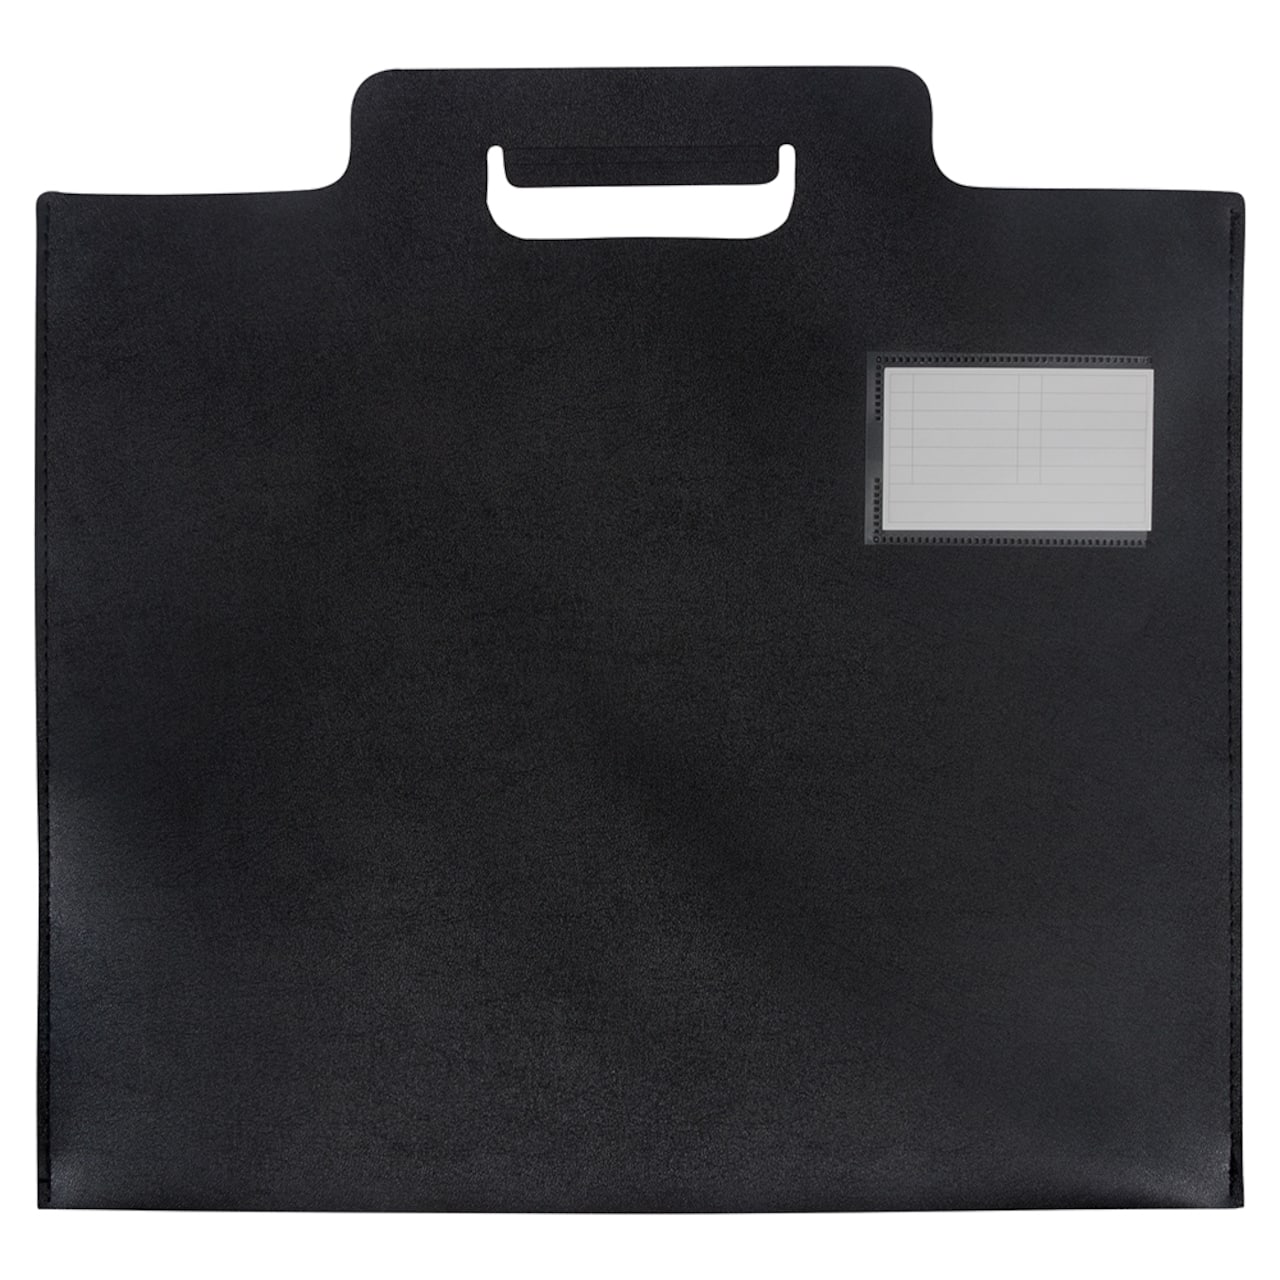 JAM Paper Black Plastic Thin Portfolio File Carry Case with Handles